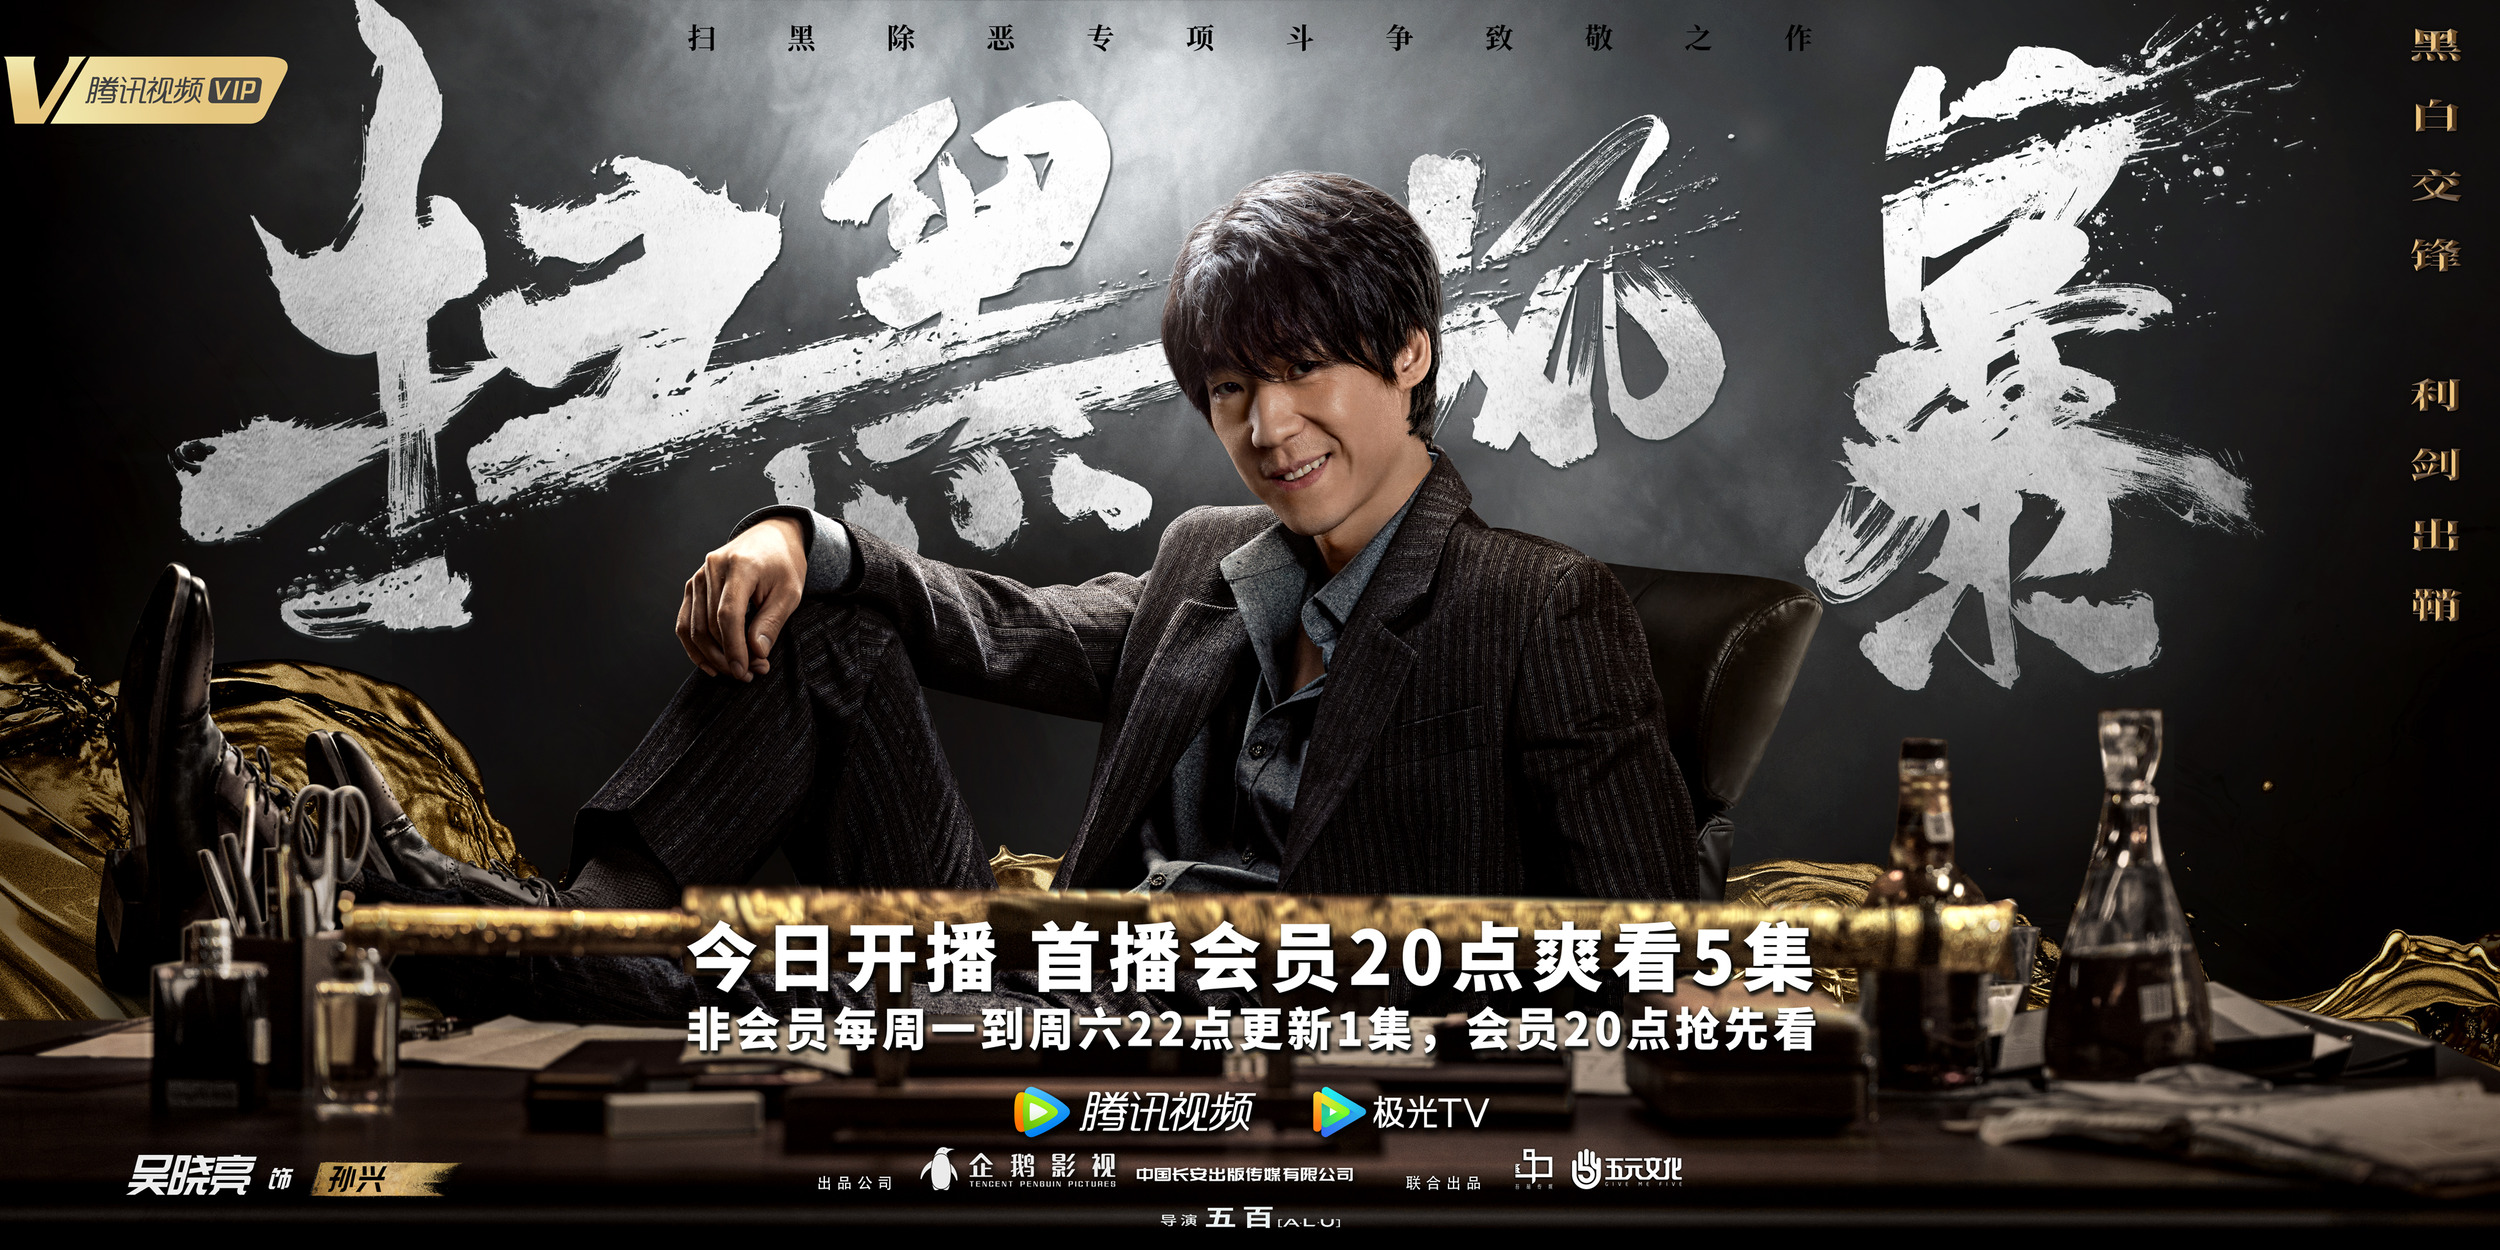 Mega Sized TV Poster Image for Sao hei feng bao (#4 of 9)